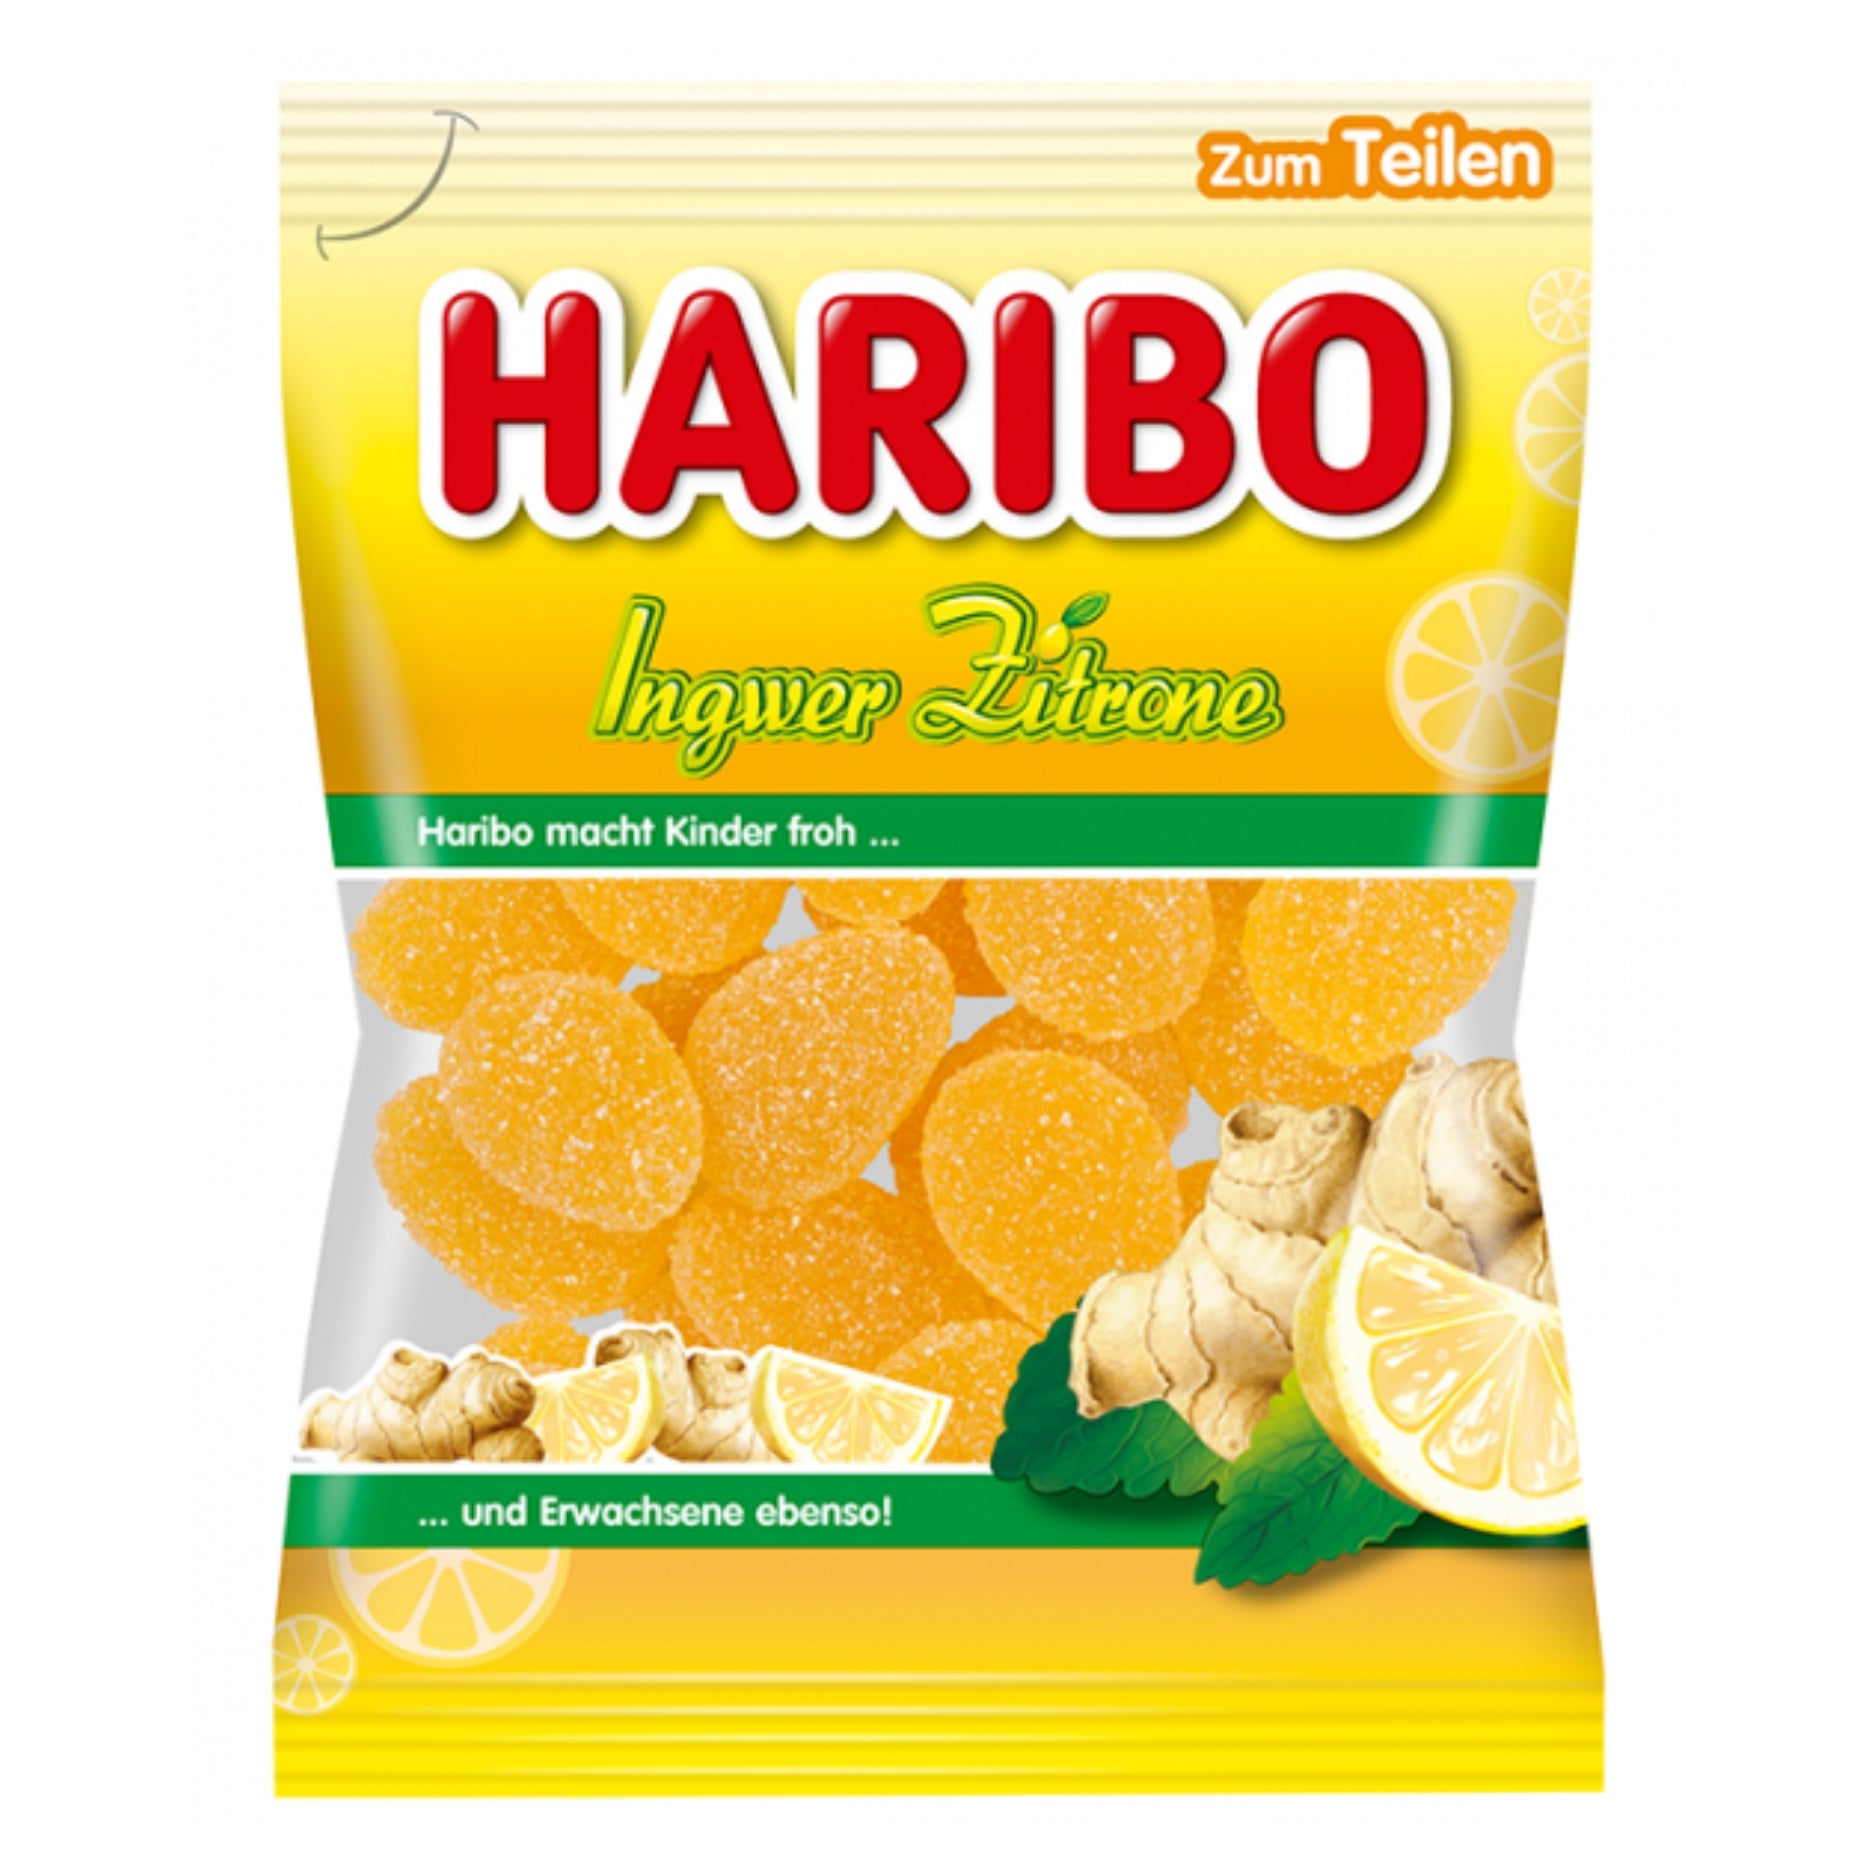 Haribo Ingwer Litrone